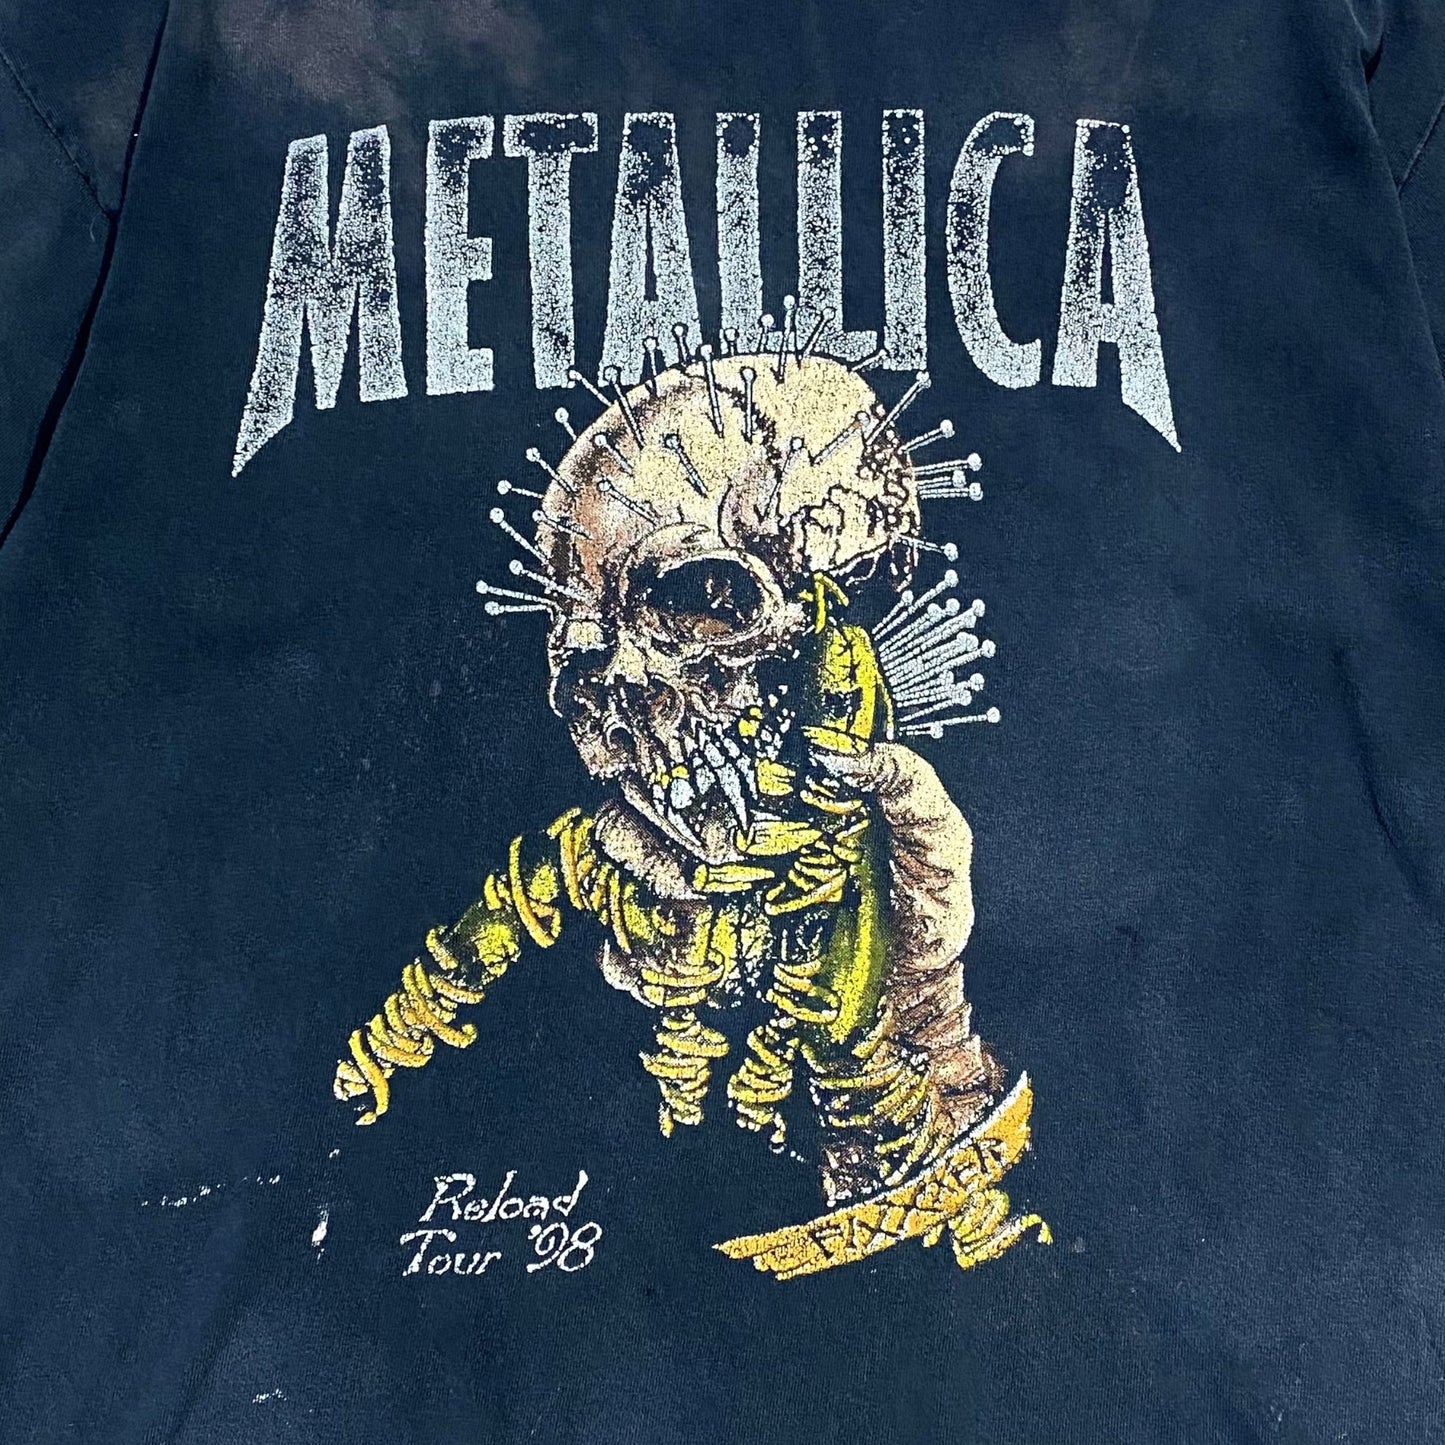 1998's "METALLICA" "Reload" tour t-shirt